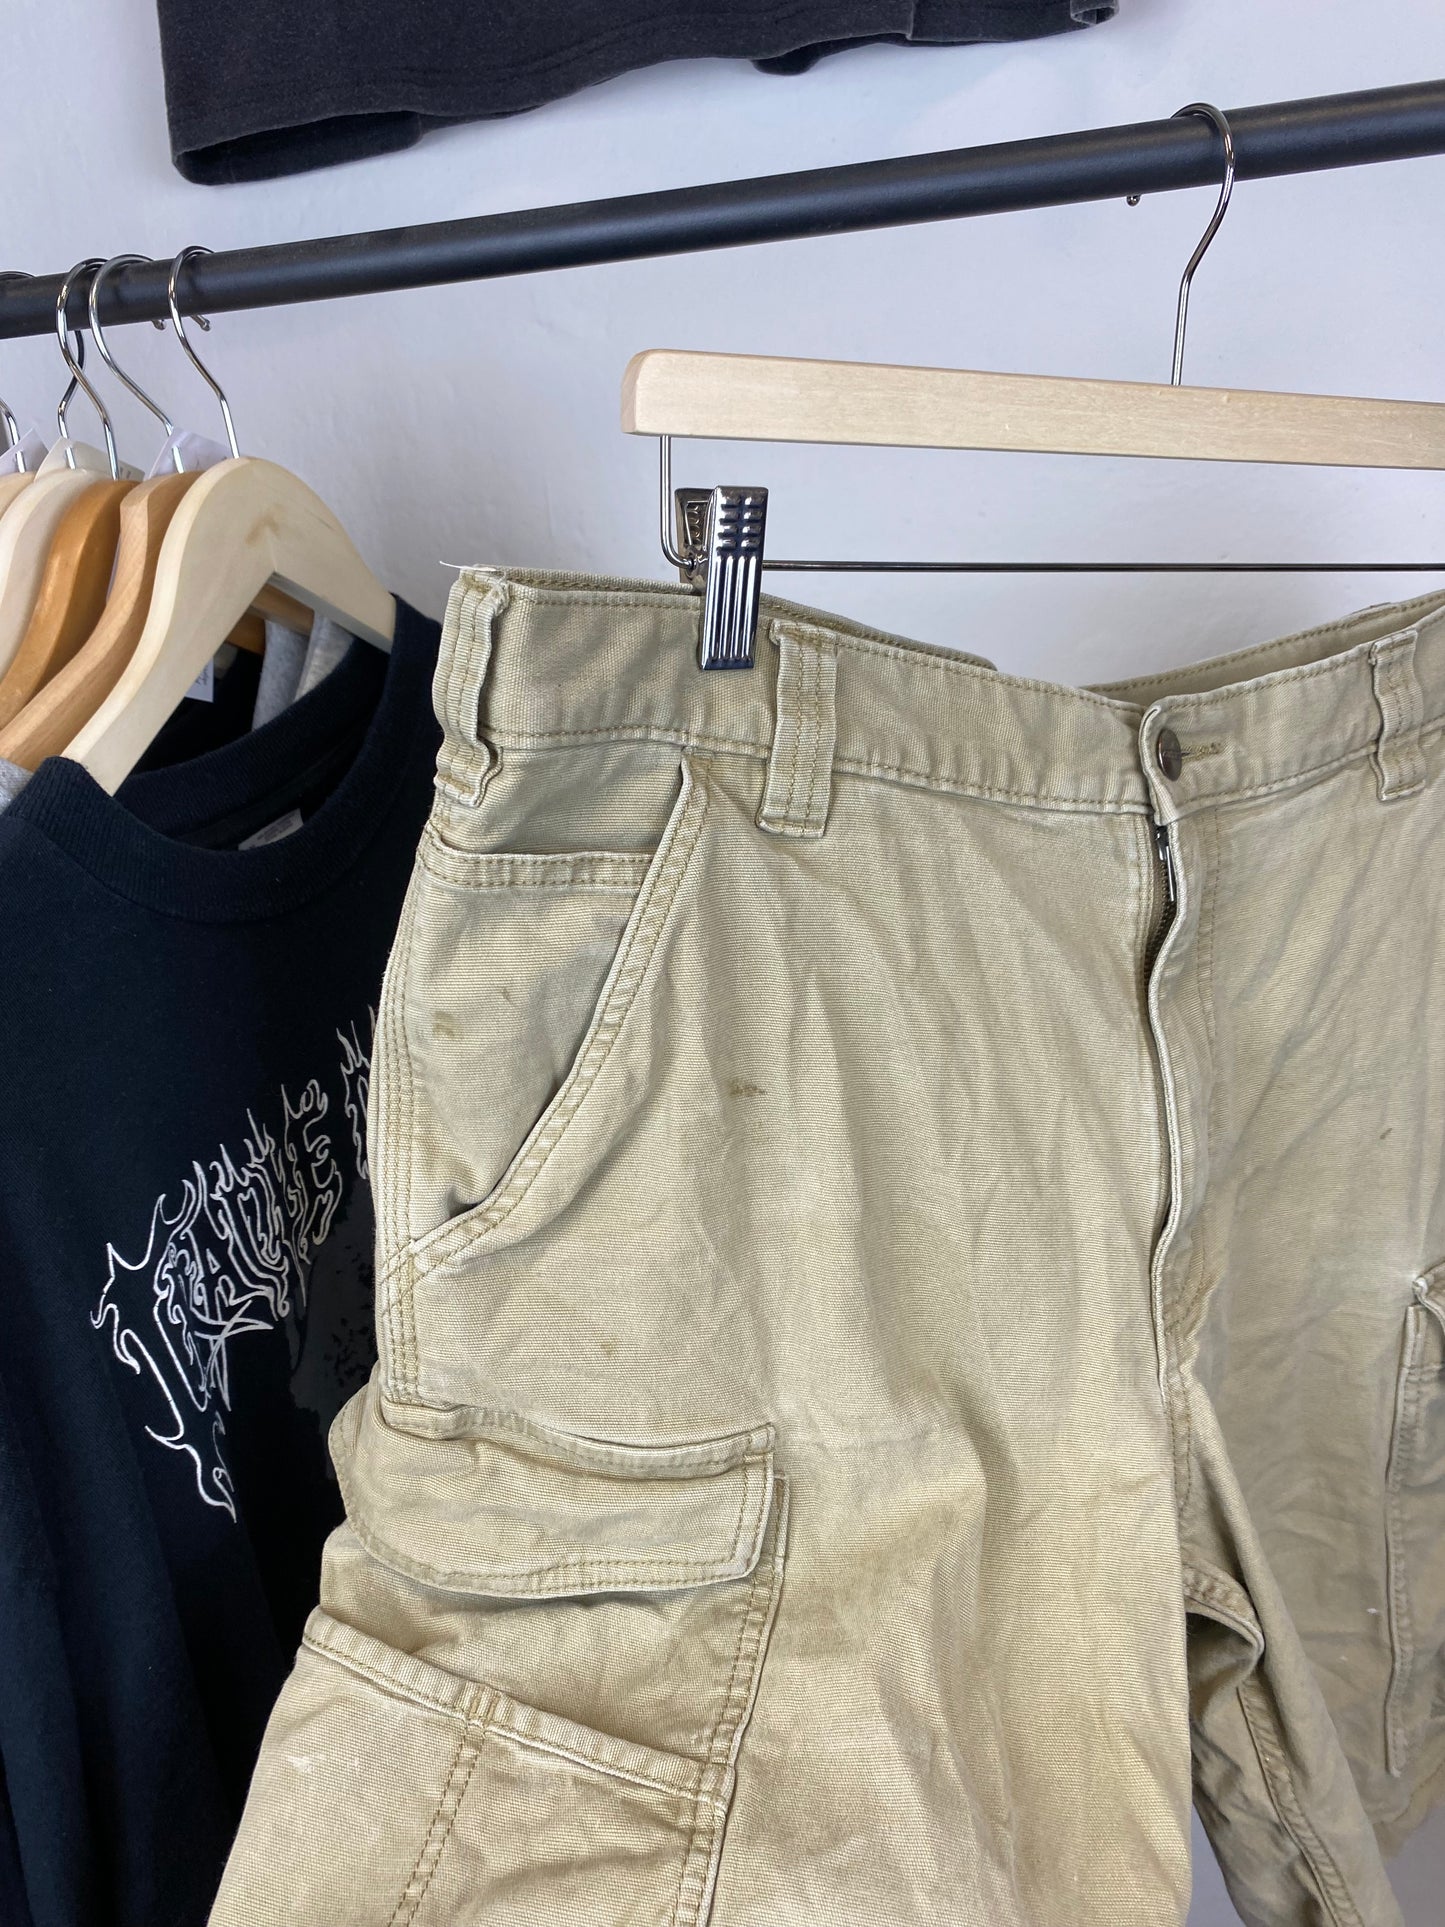 Vintage Carhartt Cargo Shorts - 36 size